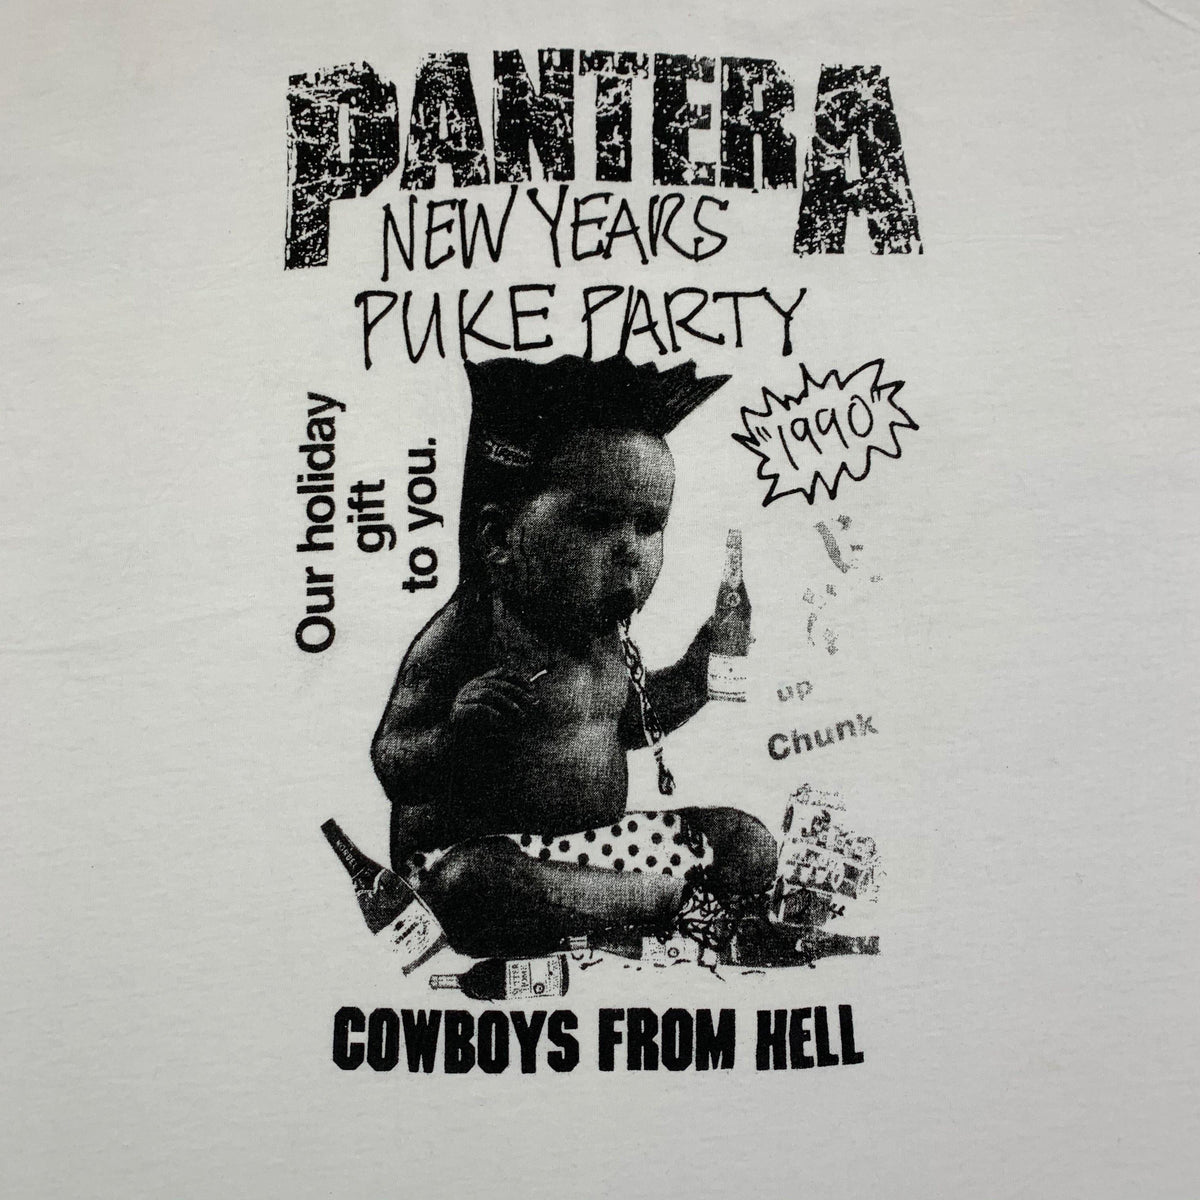 Vintage Pantera &quot;New Years Puke Party&quot; T-Shirt - jointcustodydc